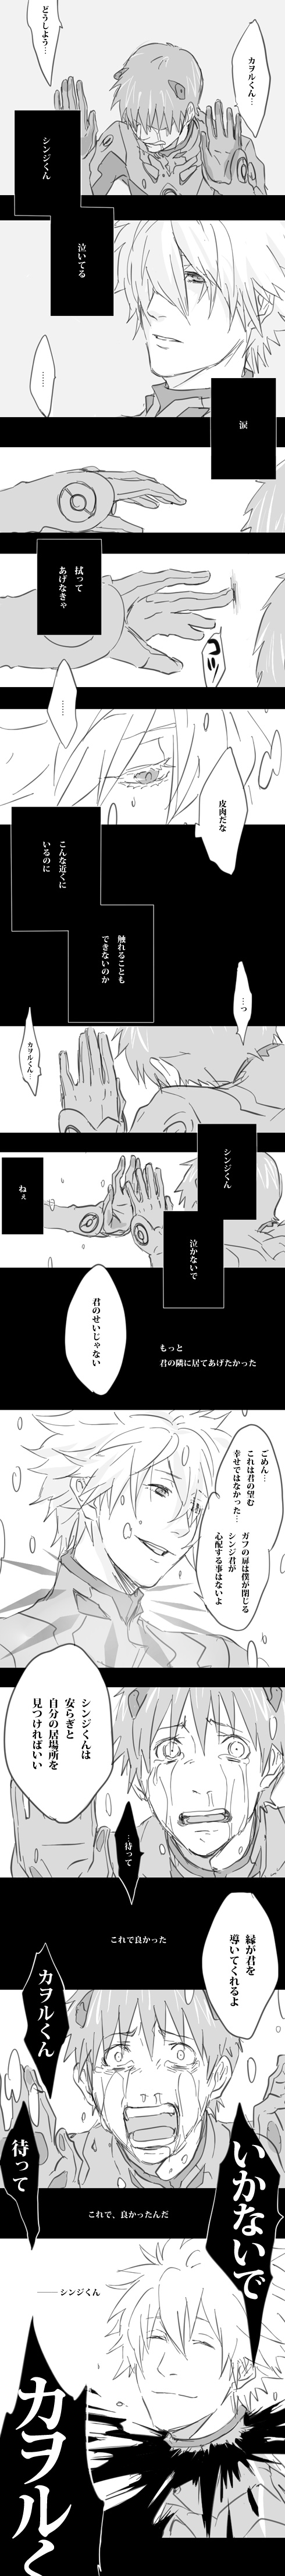 ikari shinji and nagisa kaworu (neon genesis evangelion and 2 more) drawn by rodriguez_kurosawa